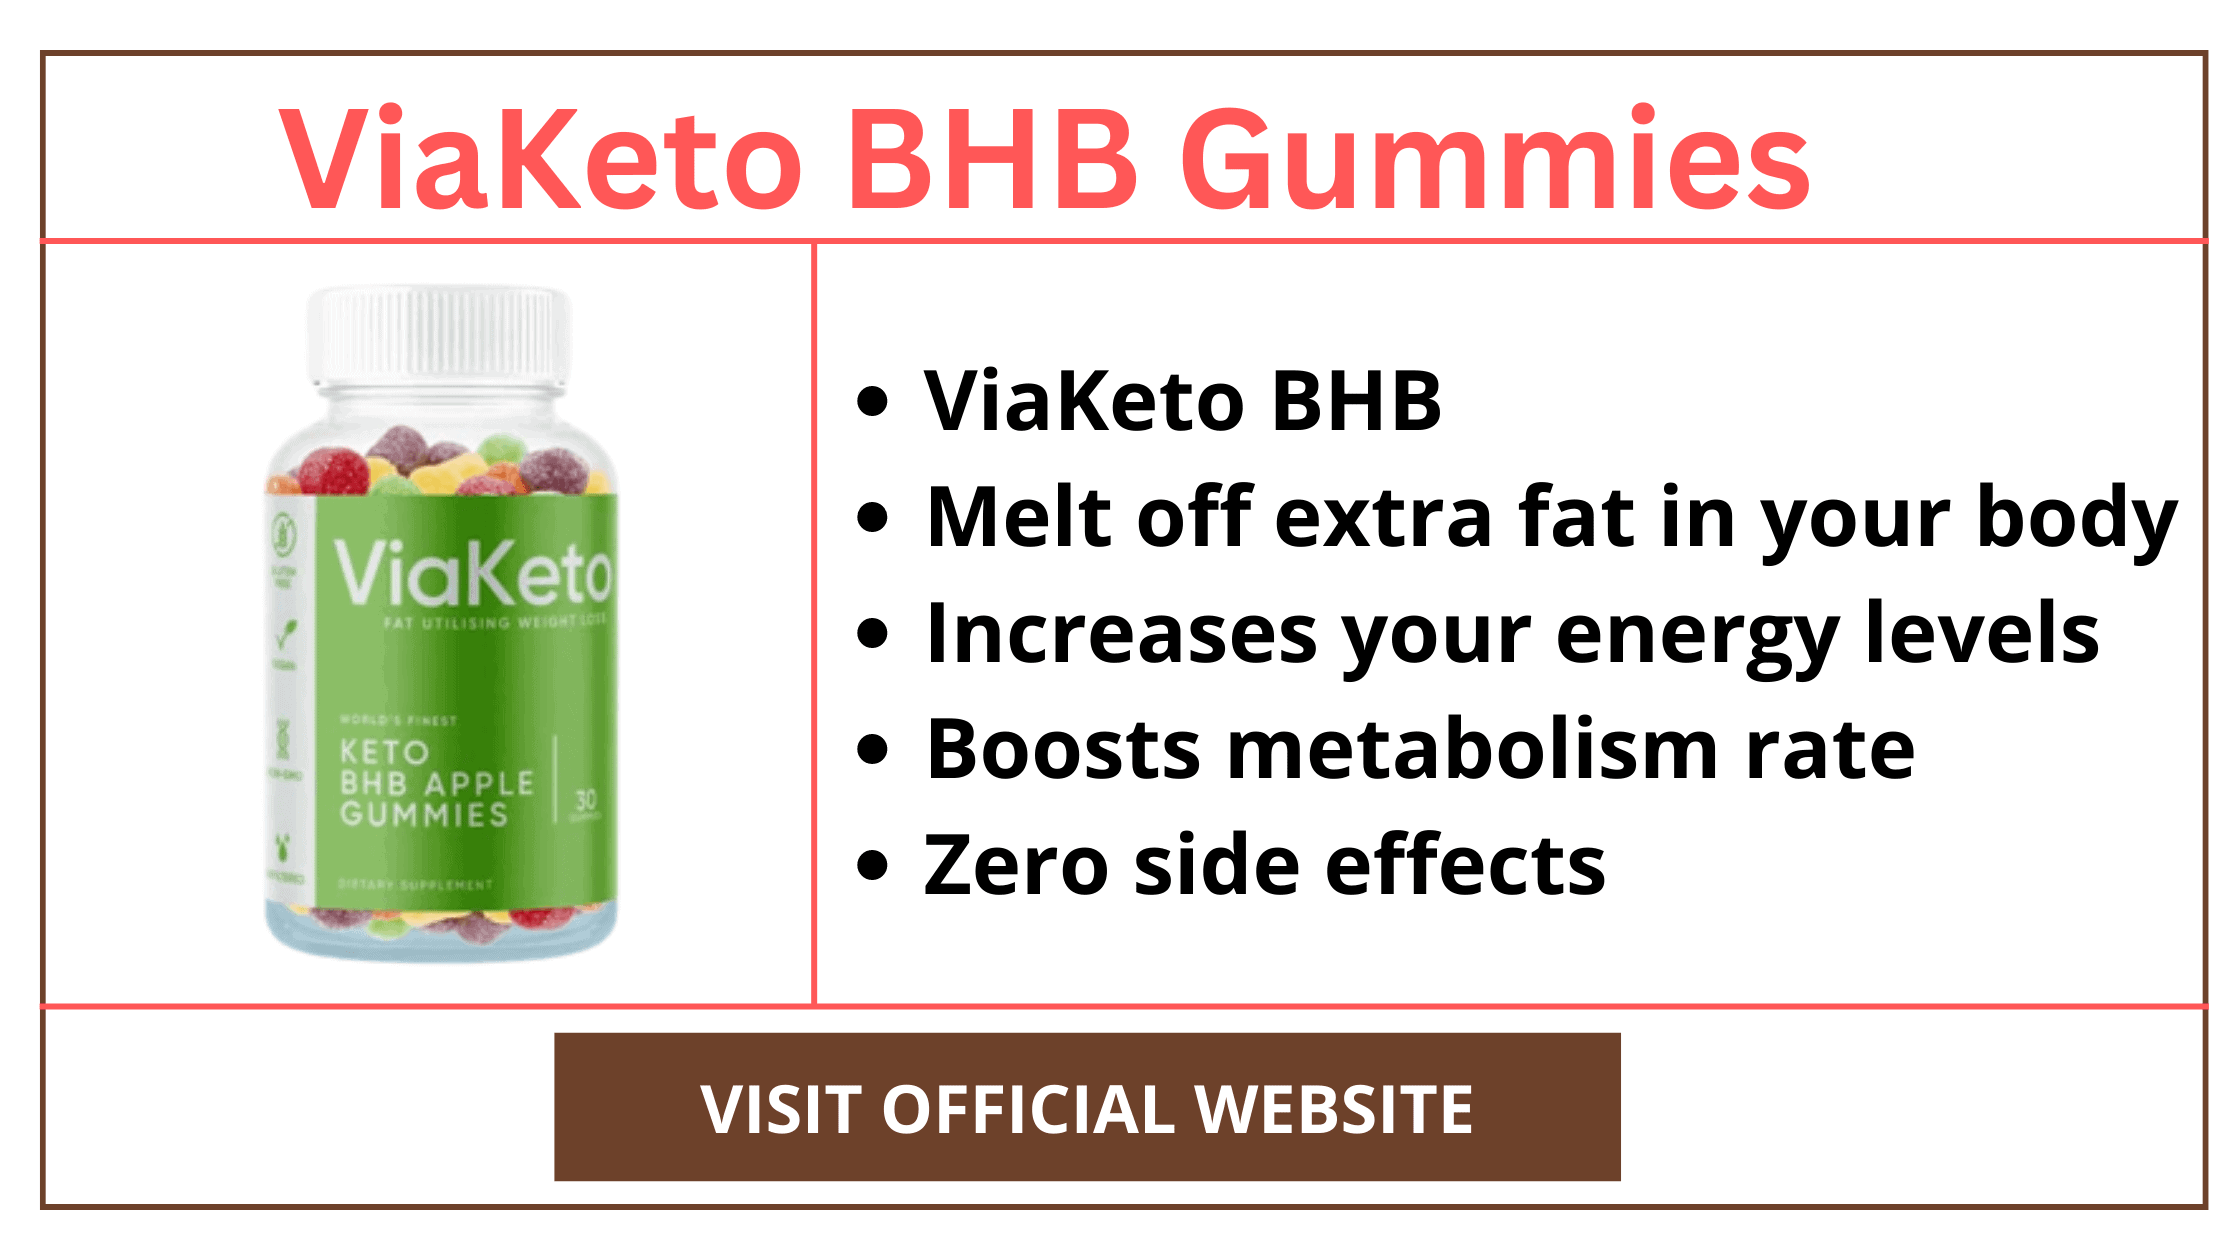 ViaKeto BHB Gummies Benefits